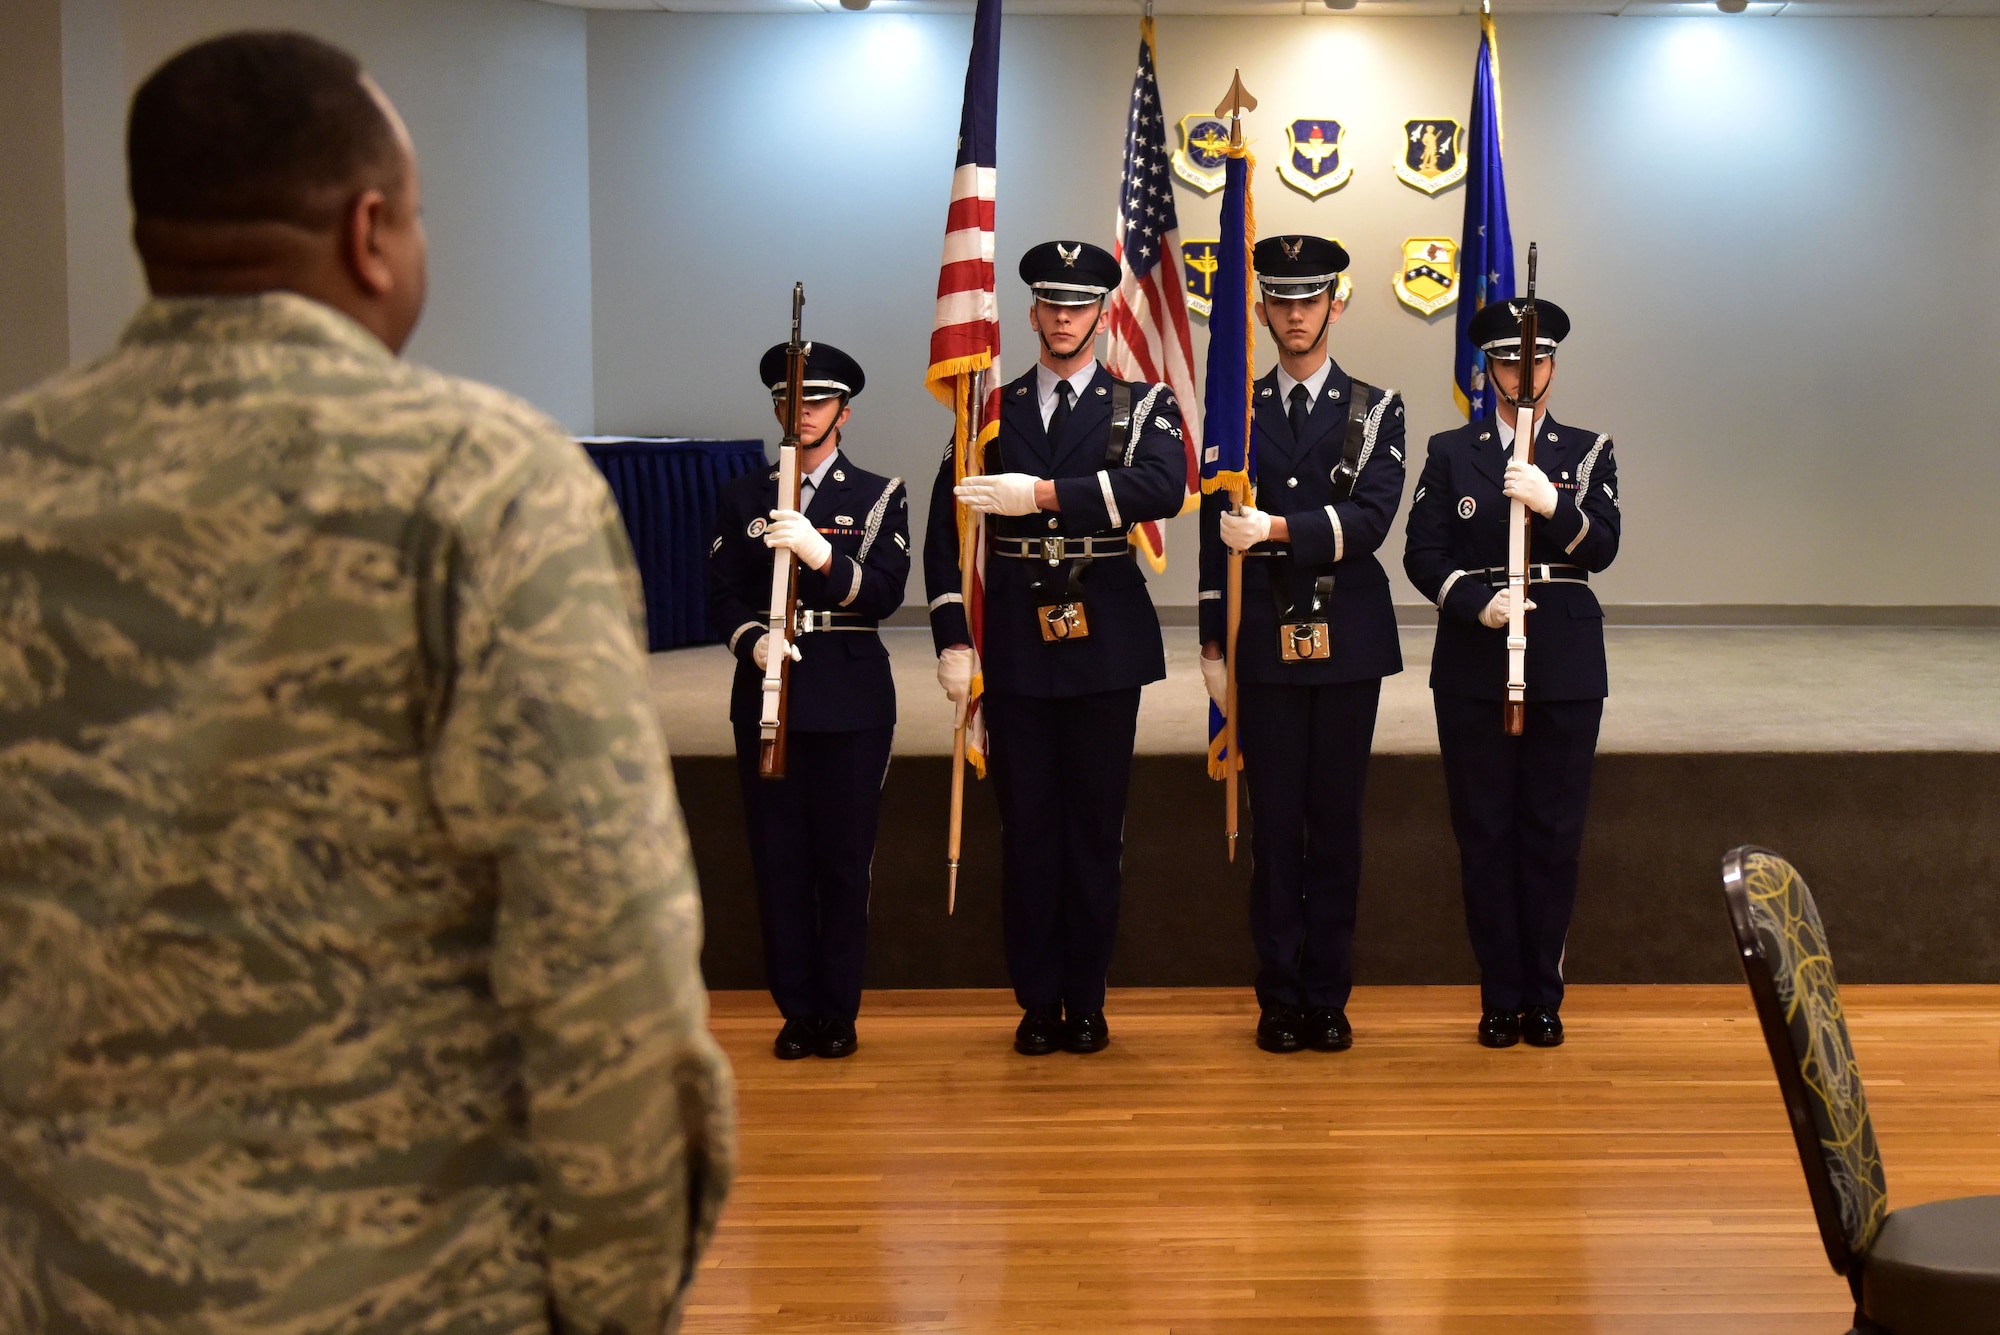 Four Airmen wearing honor guard uniforms present the colors.